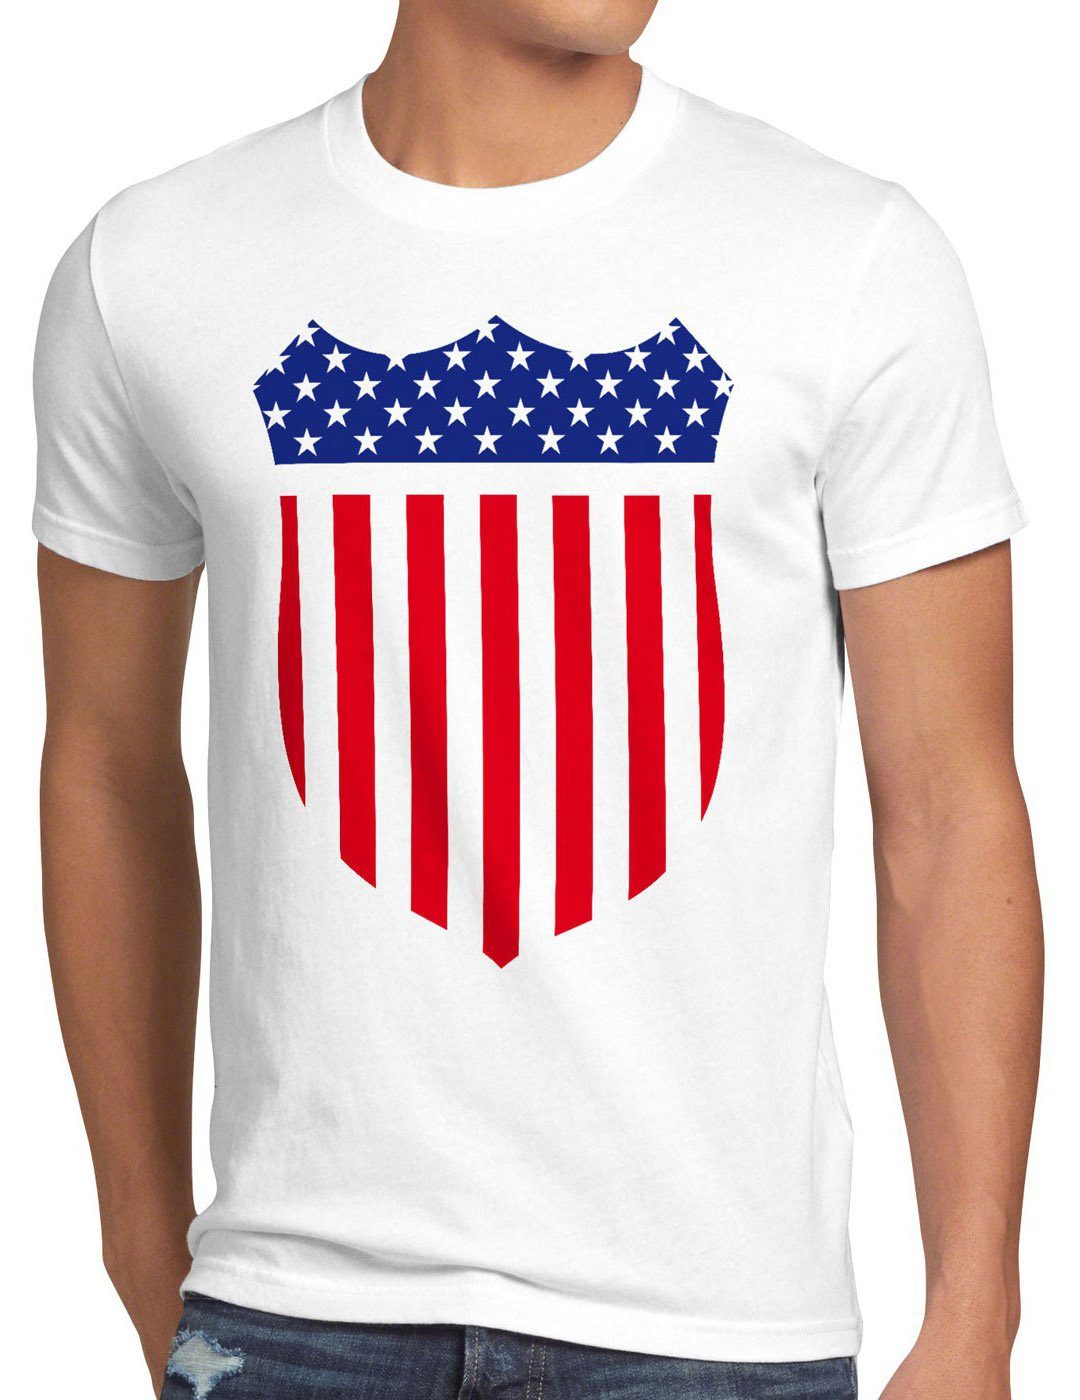 style3 Print-Shirt Herren T-Shirt USA Medaille sheriff stars Wappen us Medal Amerika Flagge stripes weiß